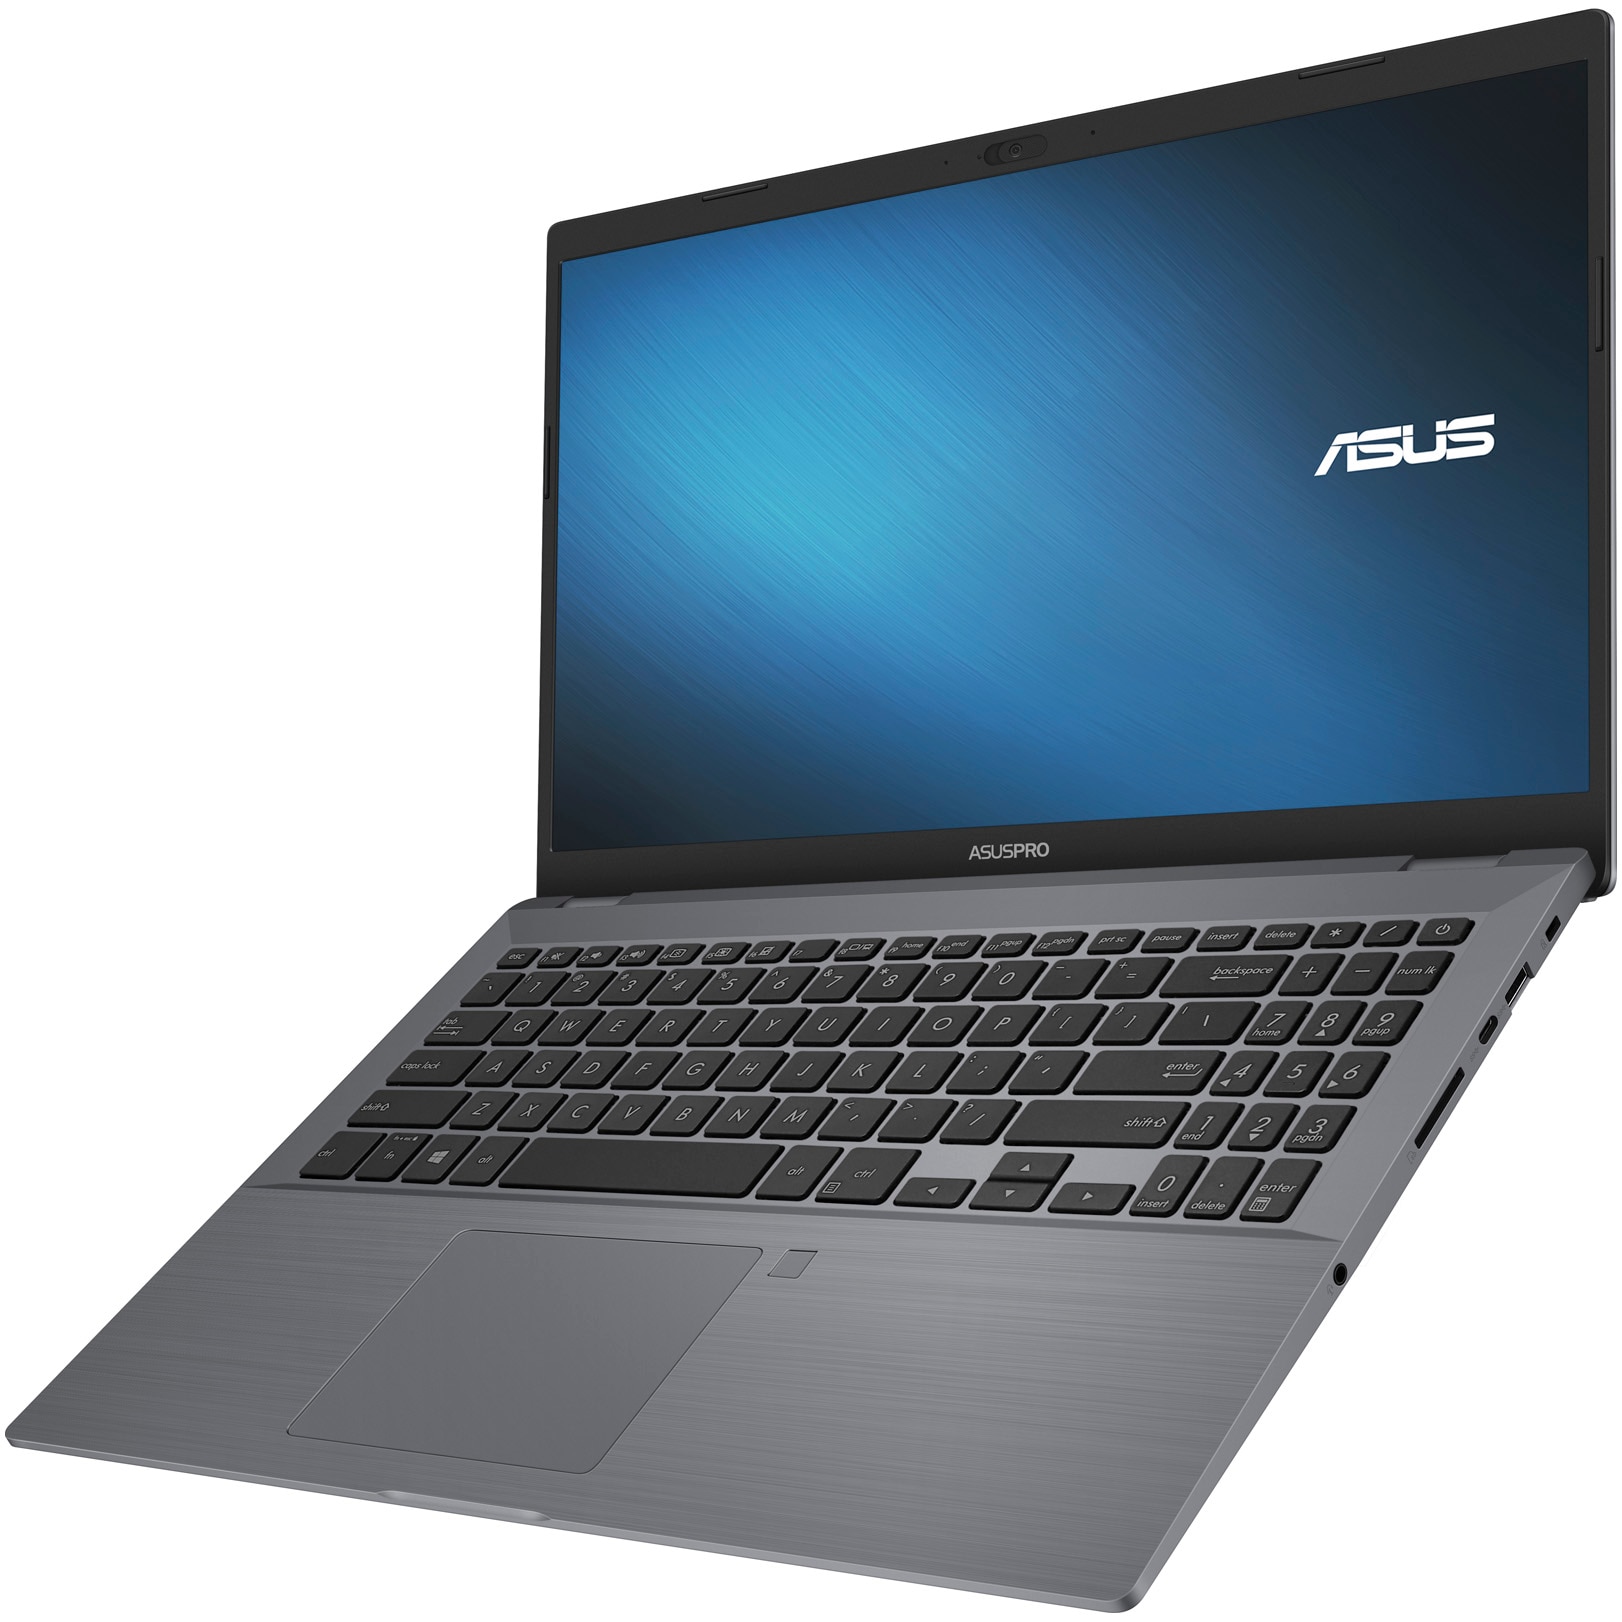 Асус ноутбук модели цены. ASUS Pro p3540fa. Ноутбук ASUS Pro p3540fa. Ноутбук ASUS Pro p1440fa-fq3043t. Ноутбук ASUS Pro p3540fa-bq1073r,15.6".